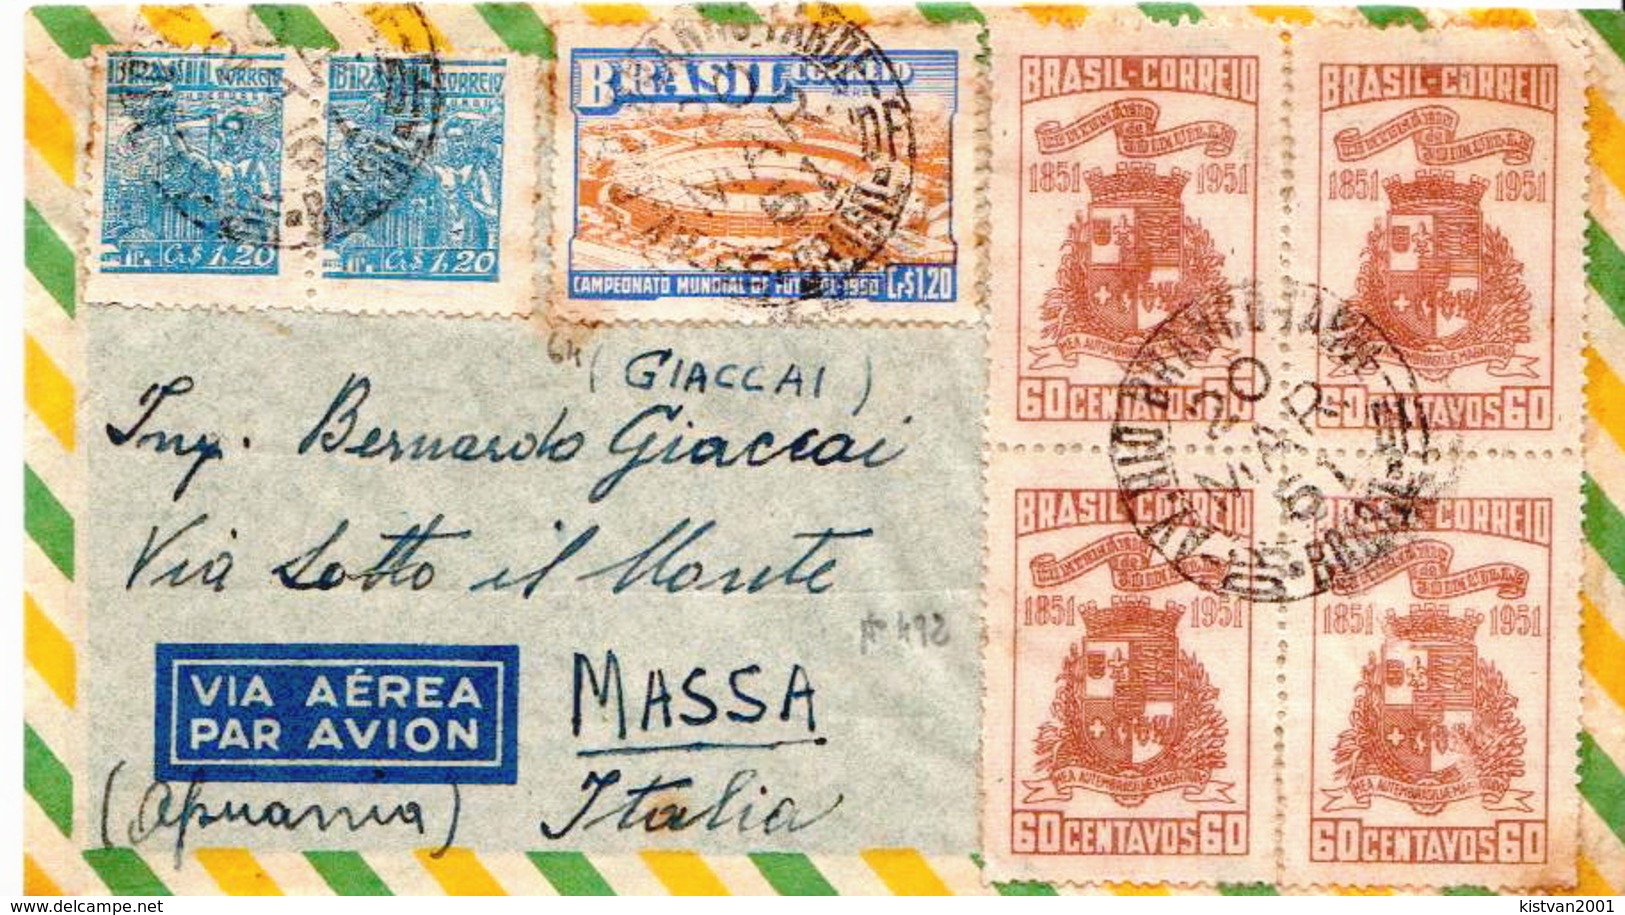 Postal History Cover: Brazil Stamps On Cover - 1950 – Brasil